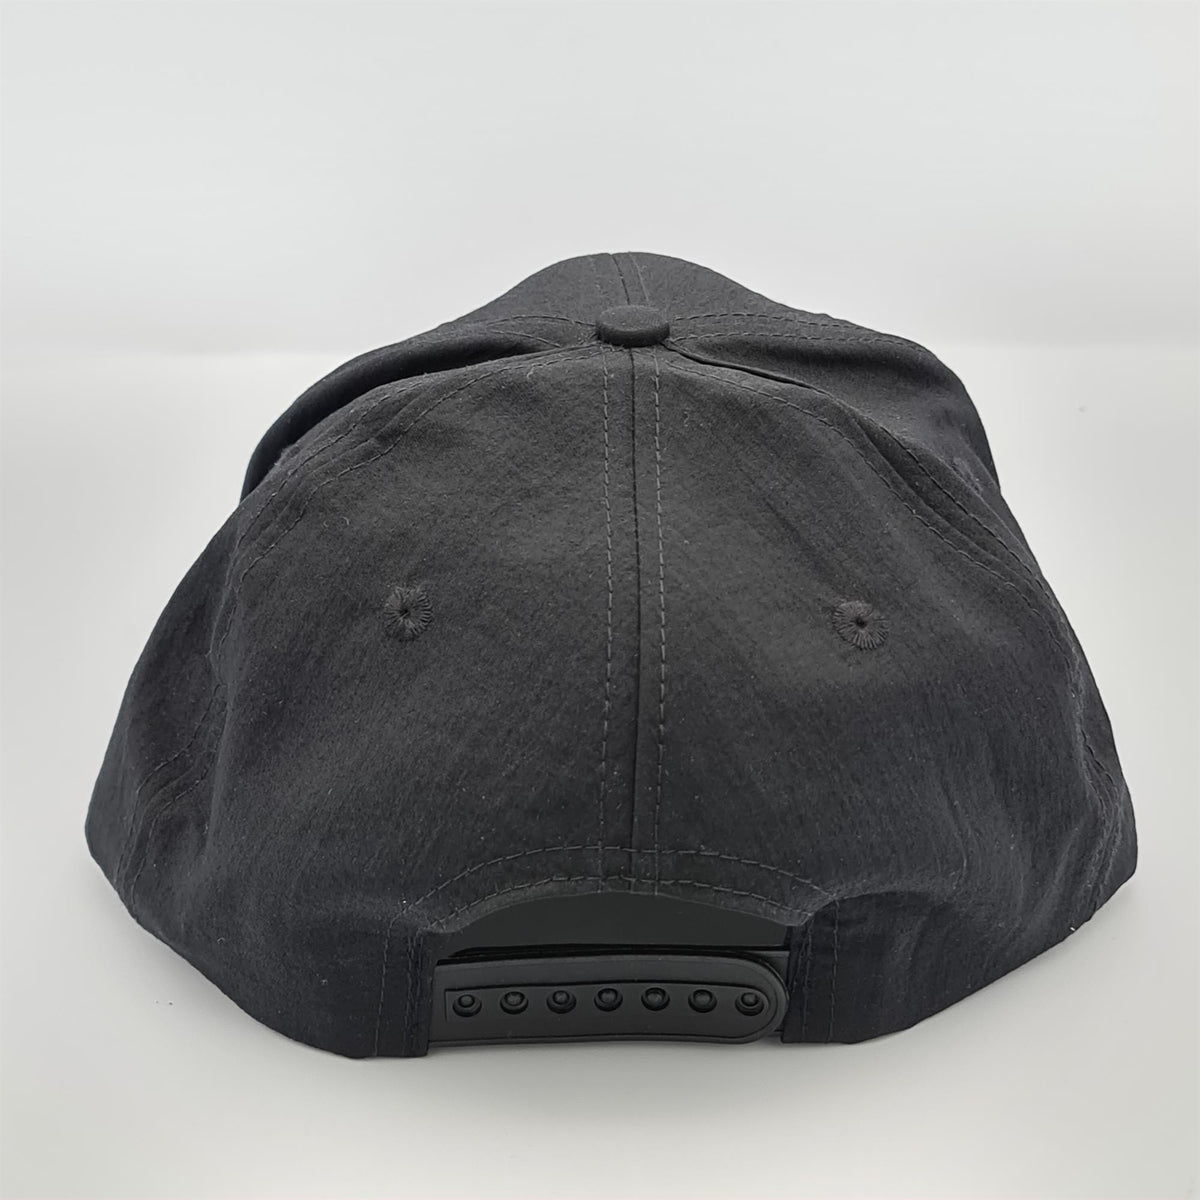 Reebok Unisex BlackTop Vintage Rare Adjustable Cap - Brand New - Black